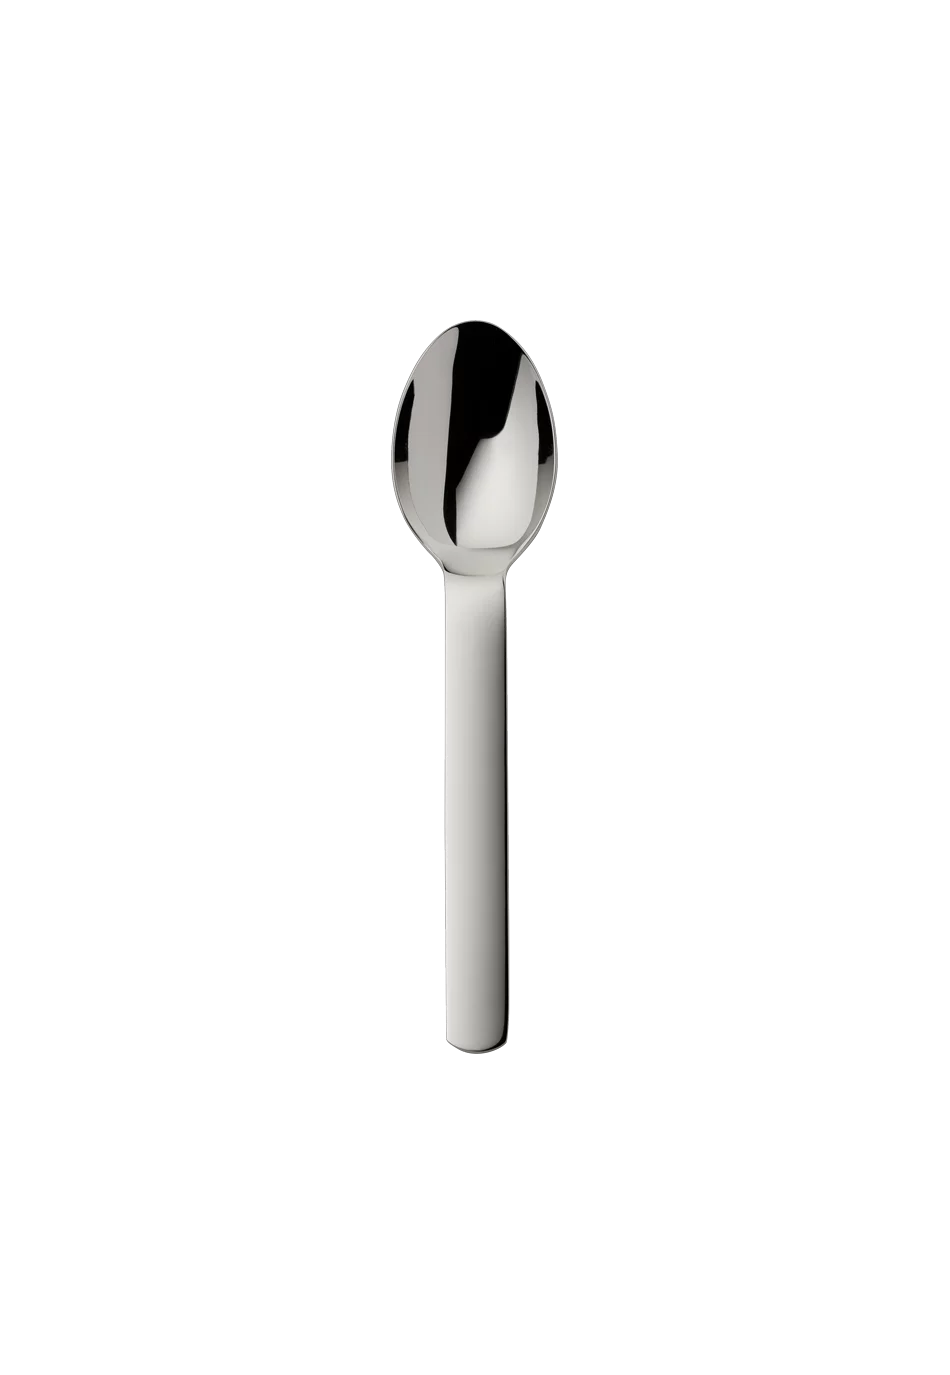 Topos Children's Spoon (18/8 stainless steel)